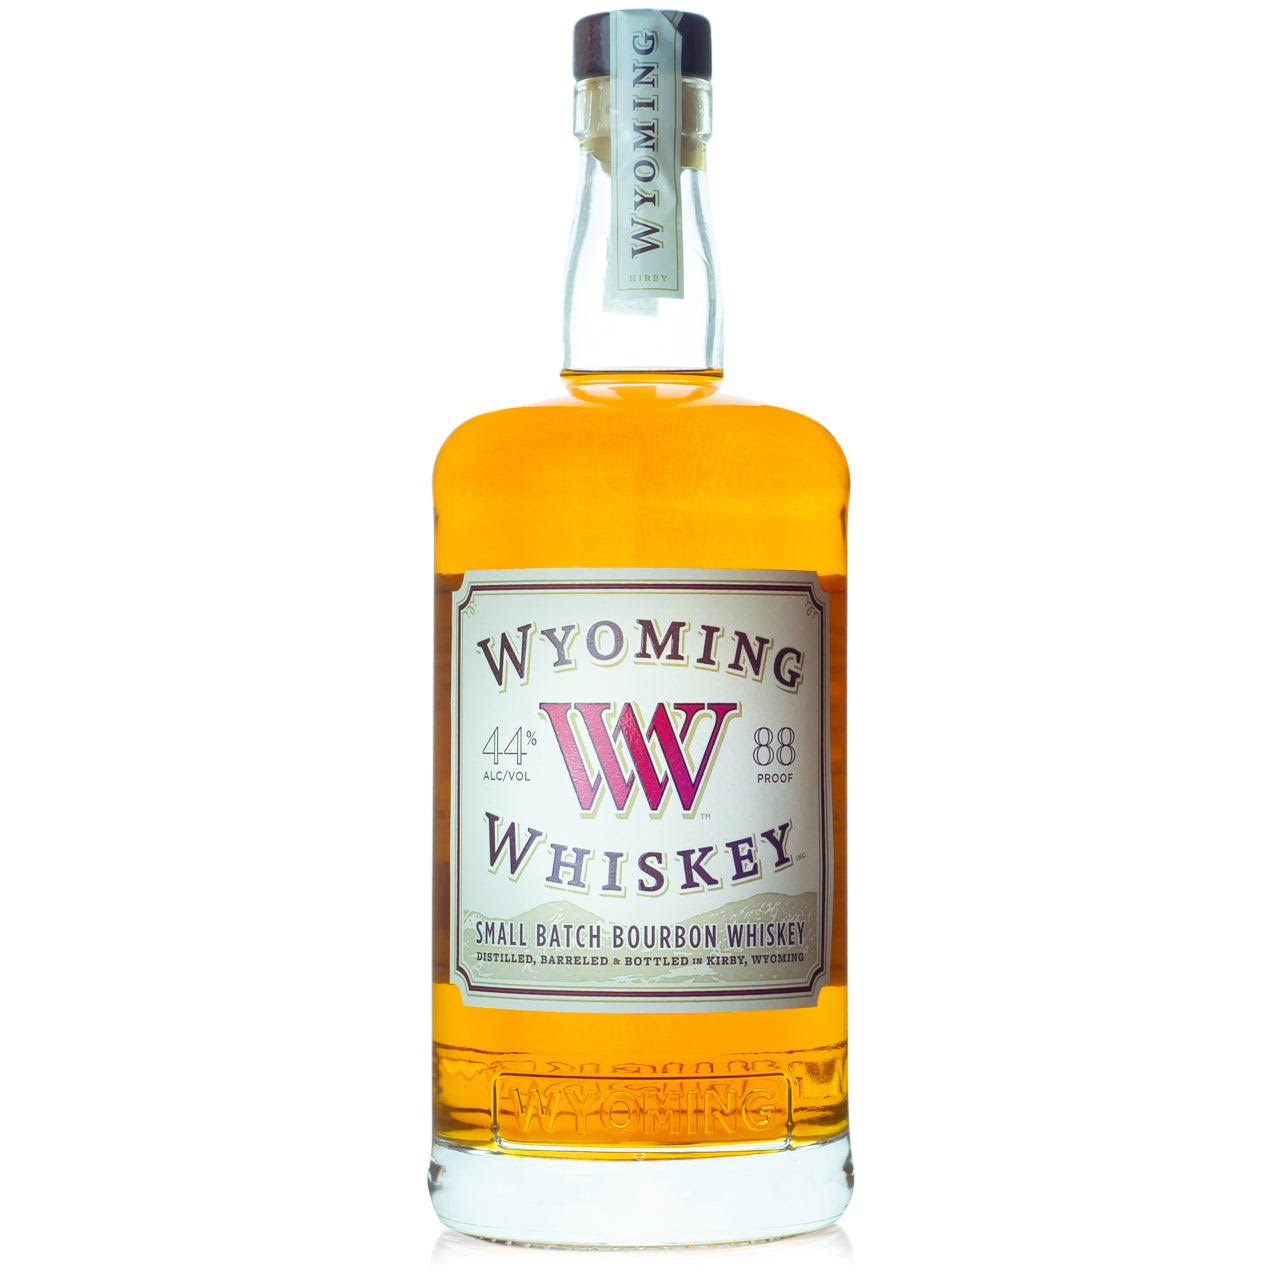 Wyoming Whiskey Small Batch Bourbon - 750 ml bottle